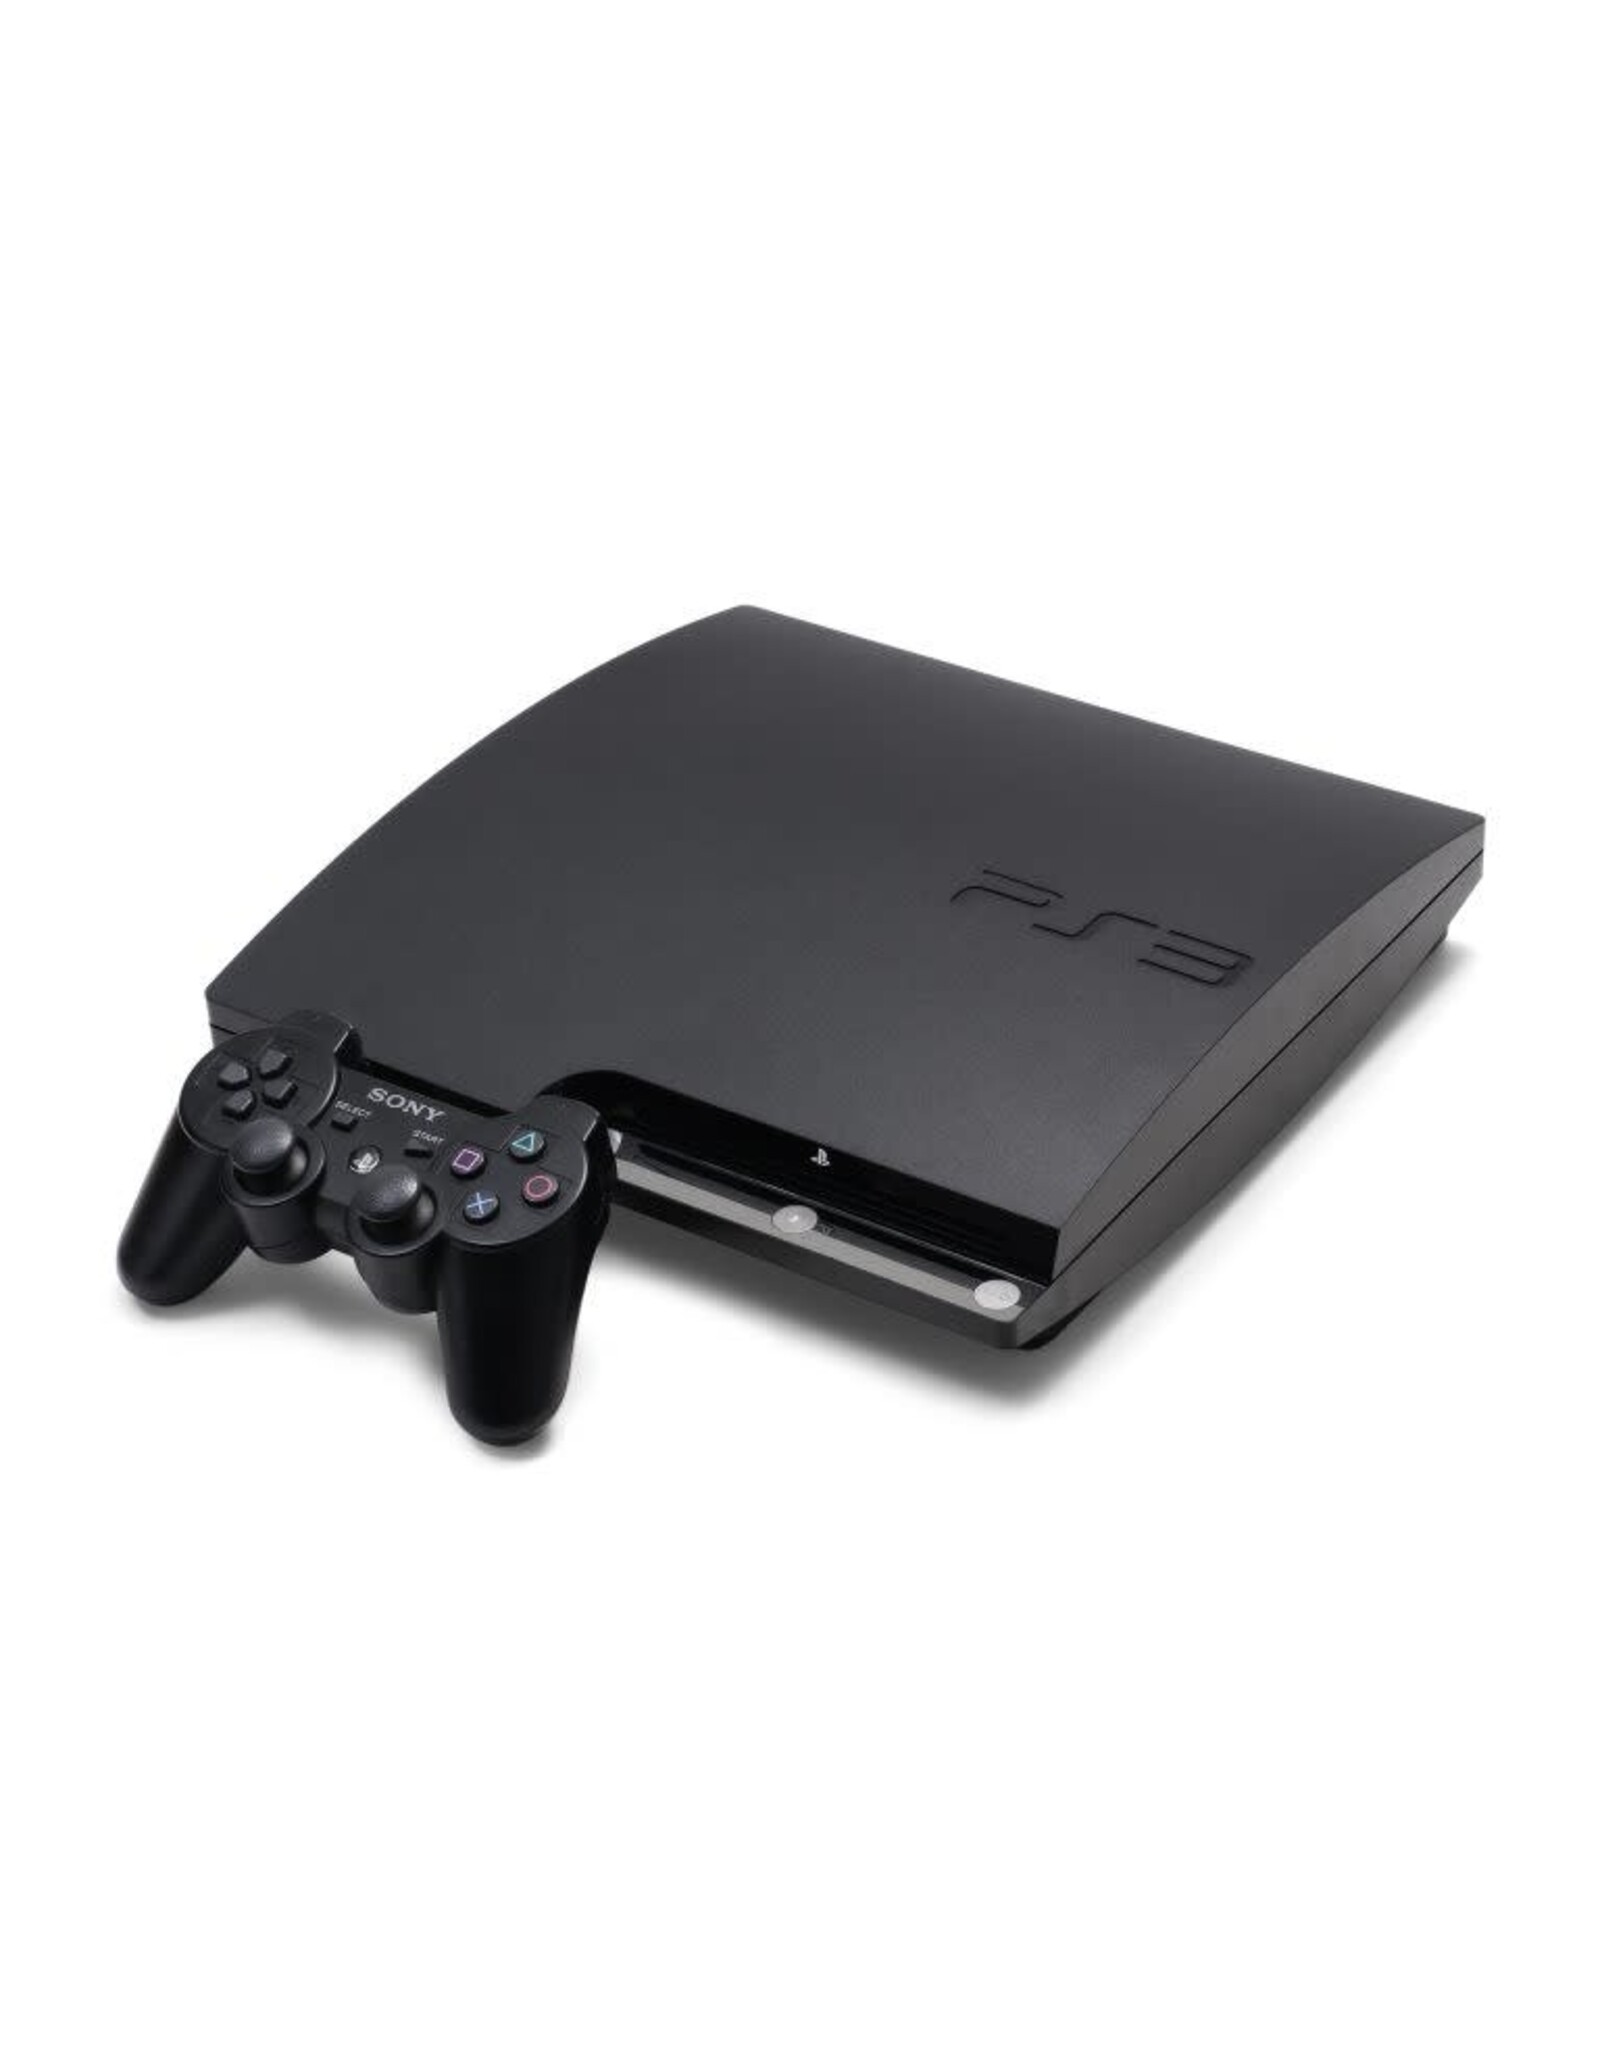 Sony PS3 Playstation 3 Slim Console 160GB (Used)